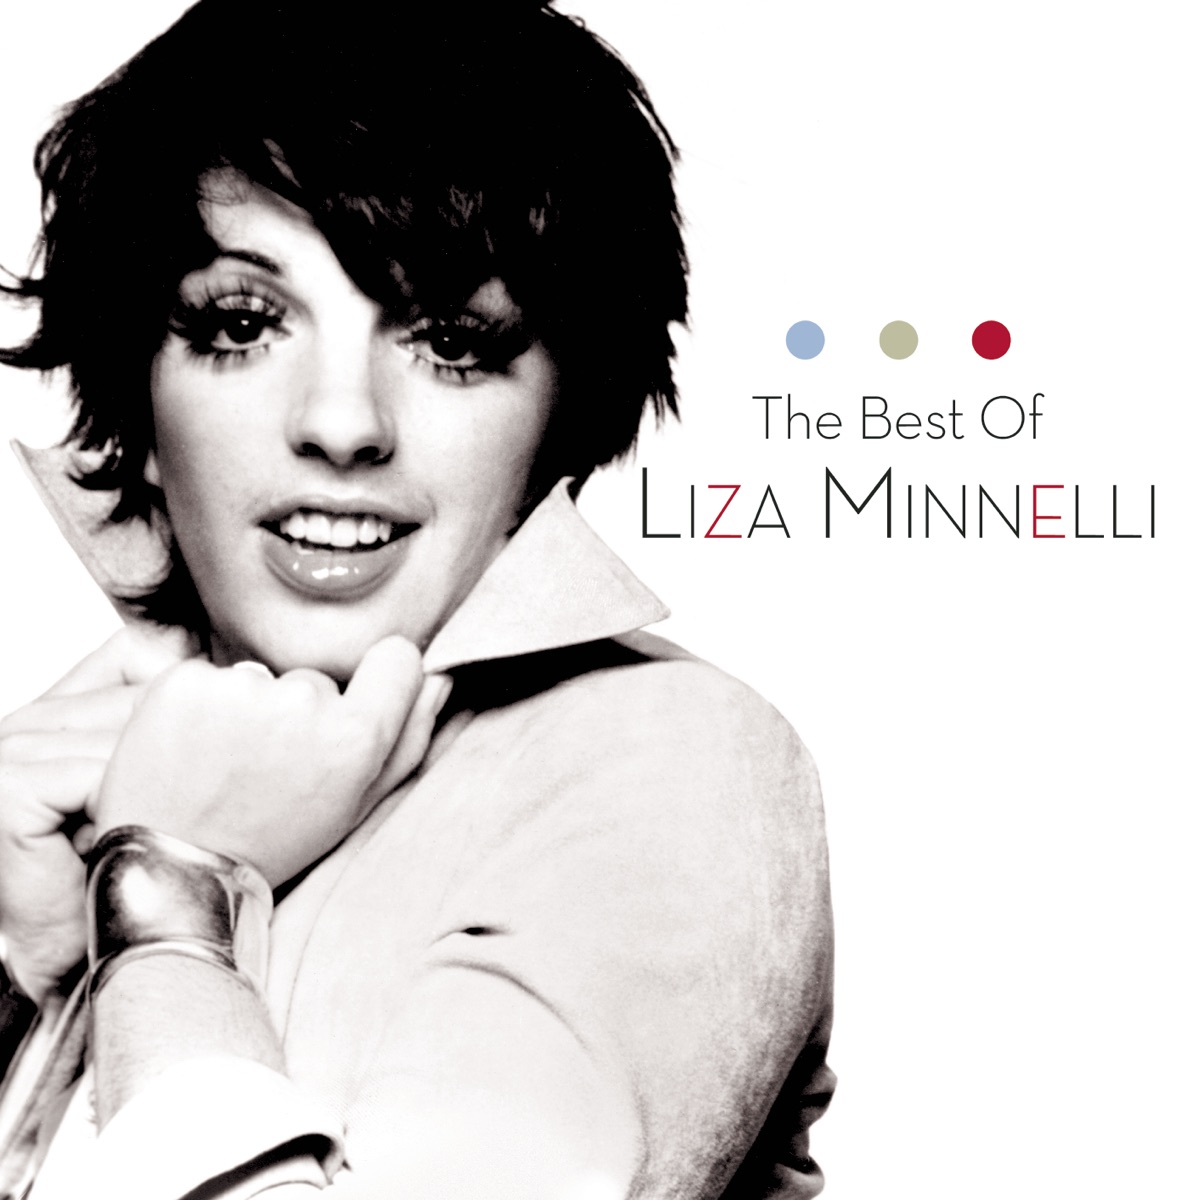 LIZA MINELLI CD: "GENTLY" 1996